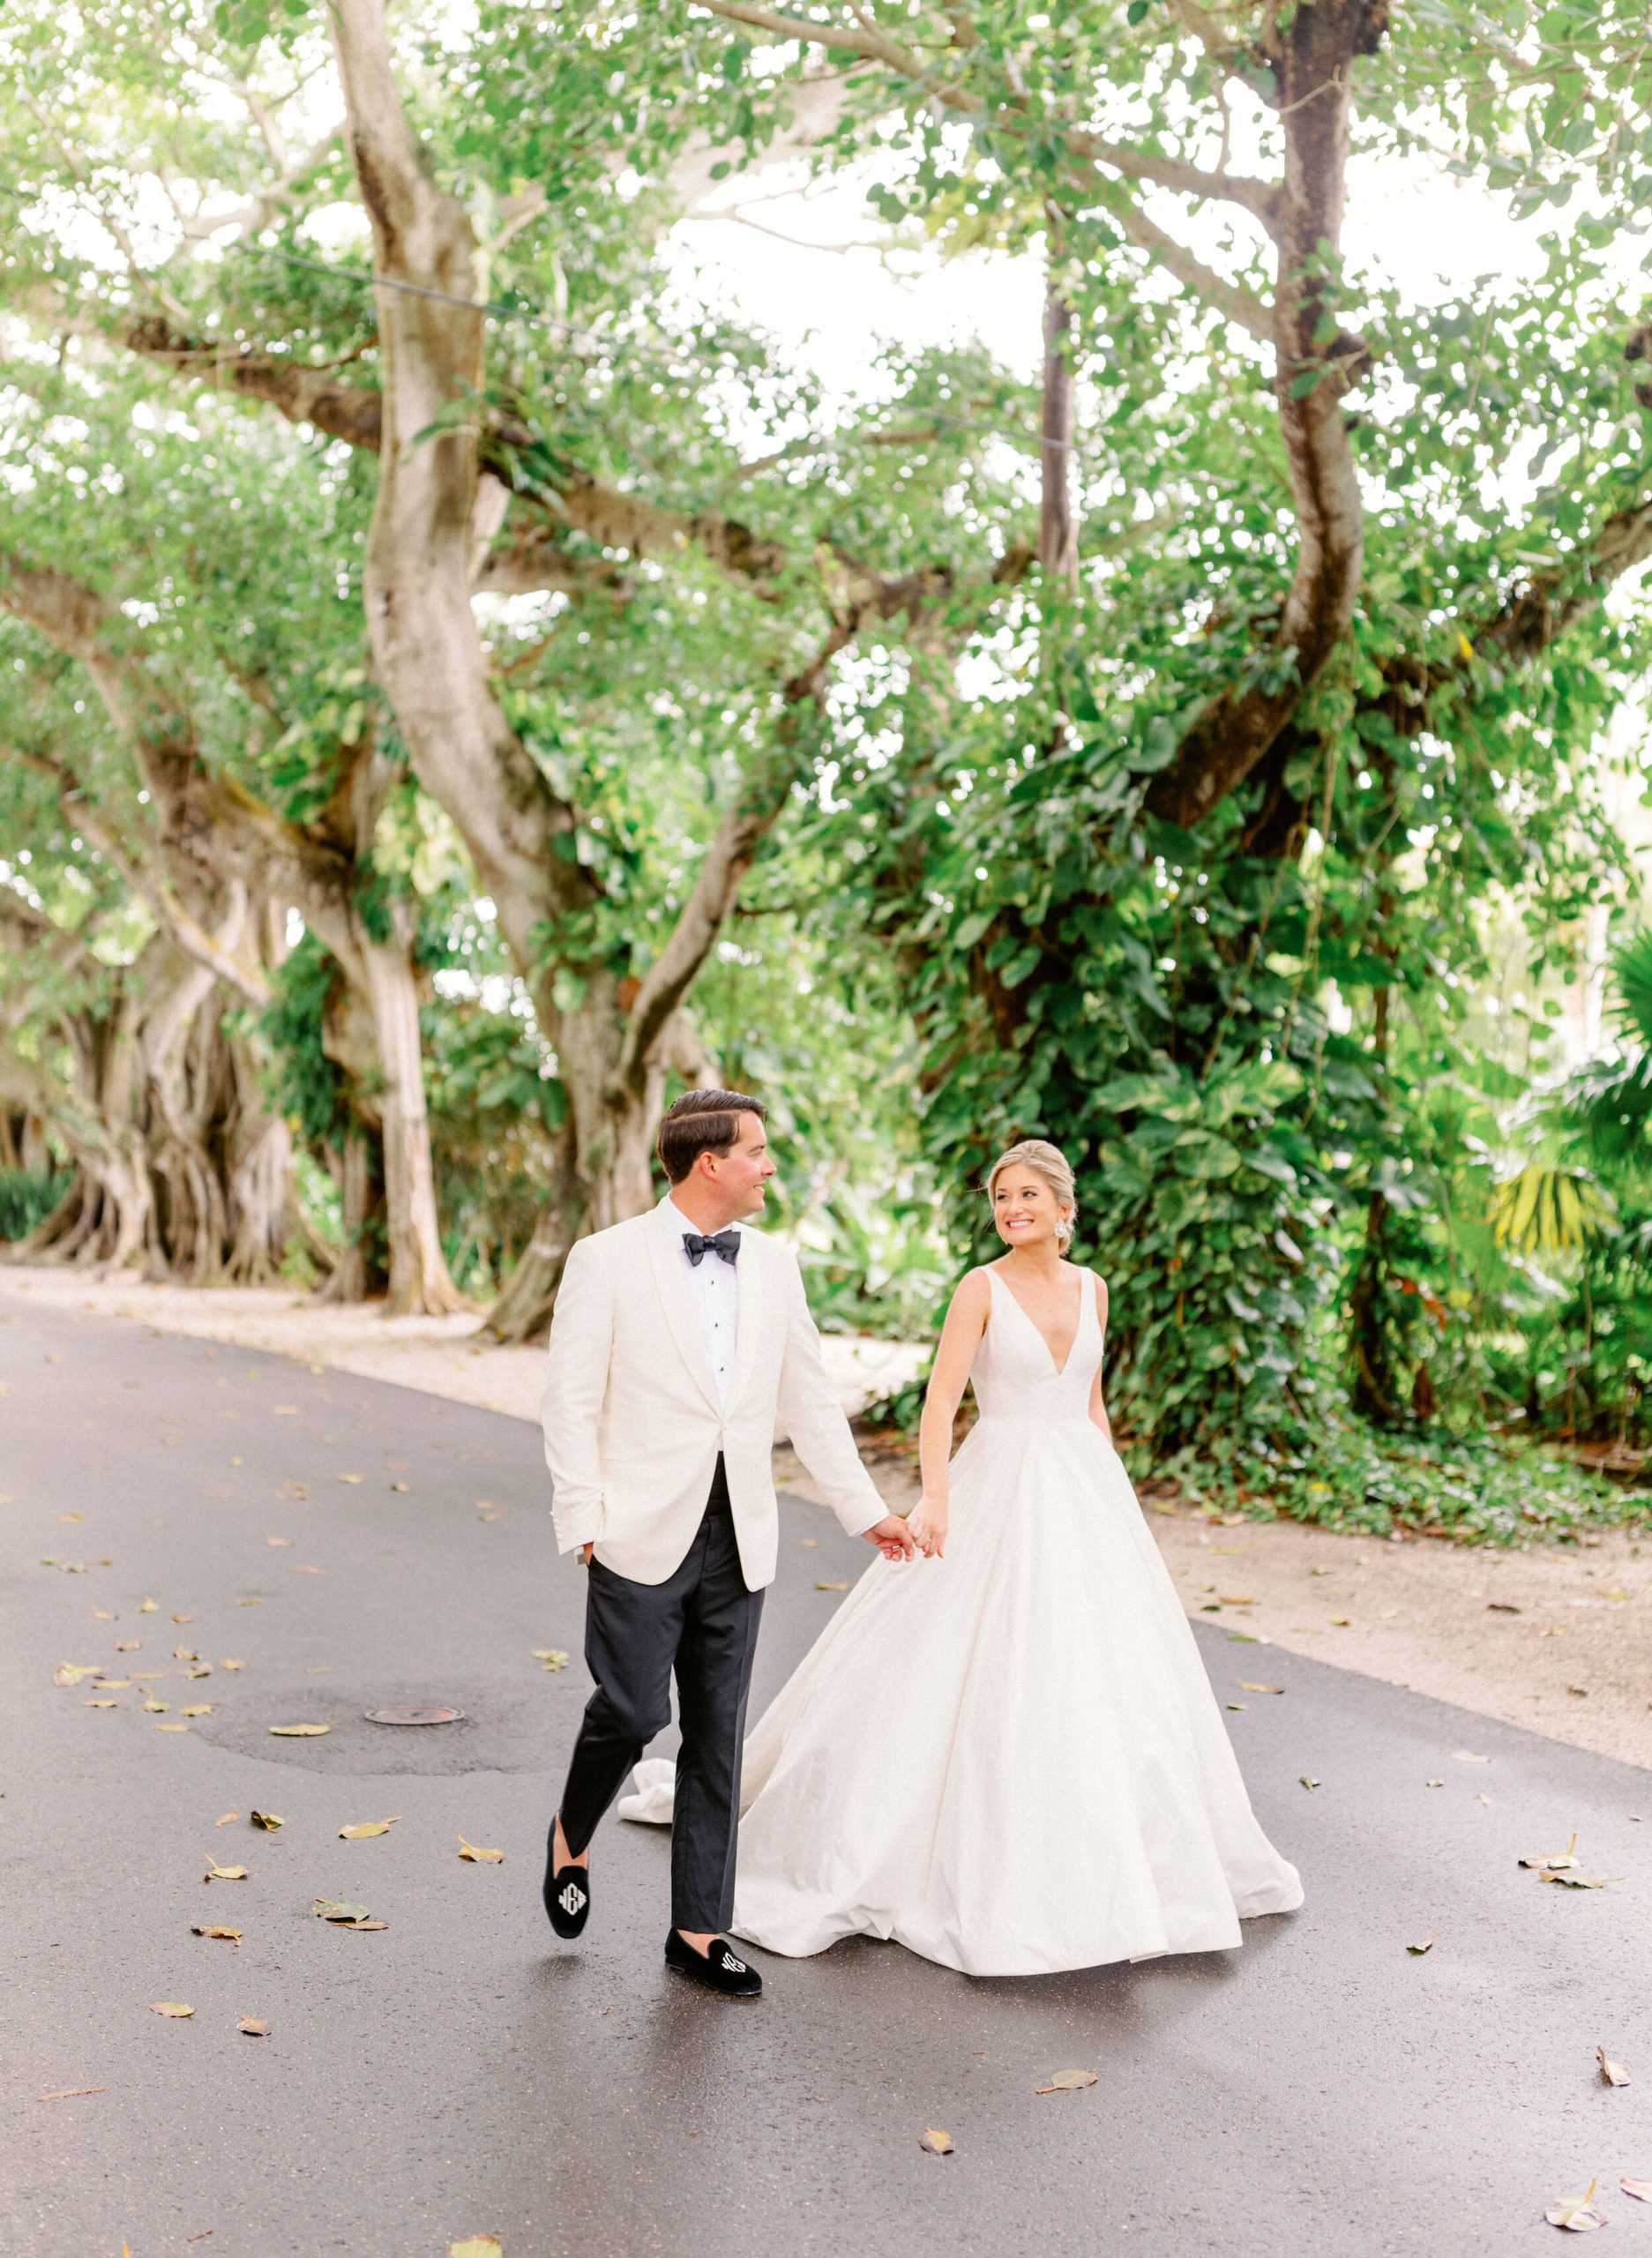 Couplw walking through the Banyan Trees at Gasparilla Inn in Boca Grande